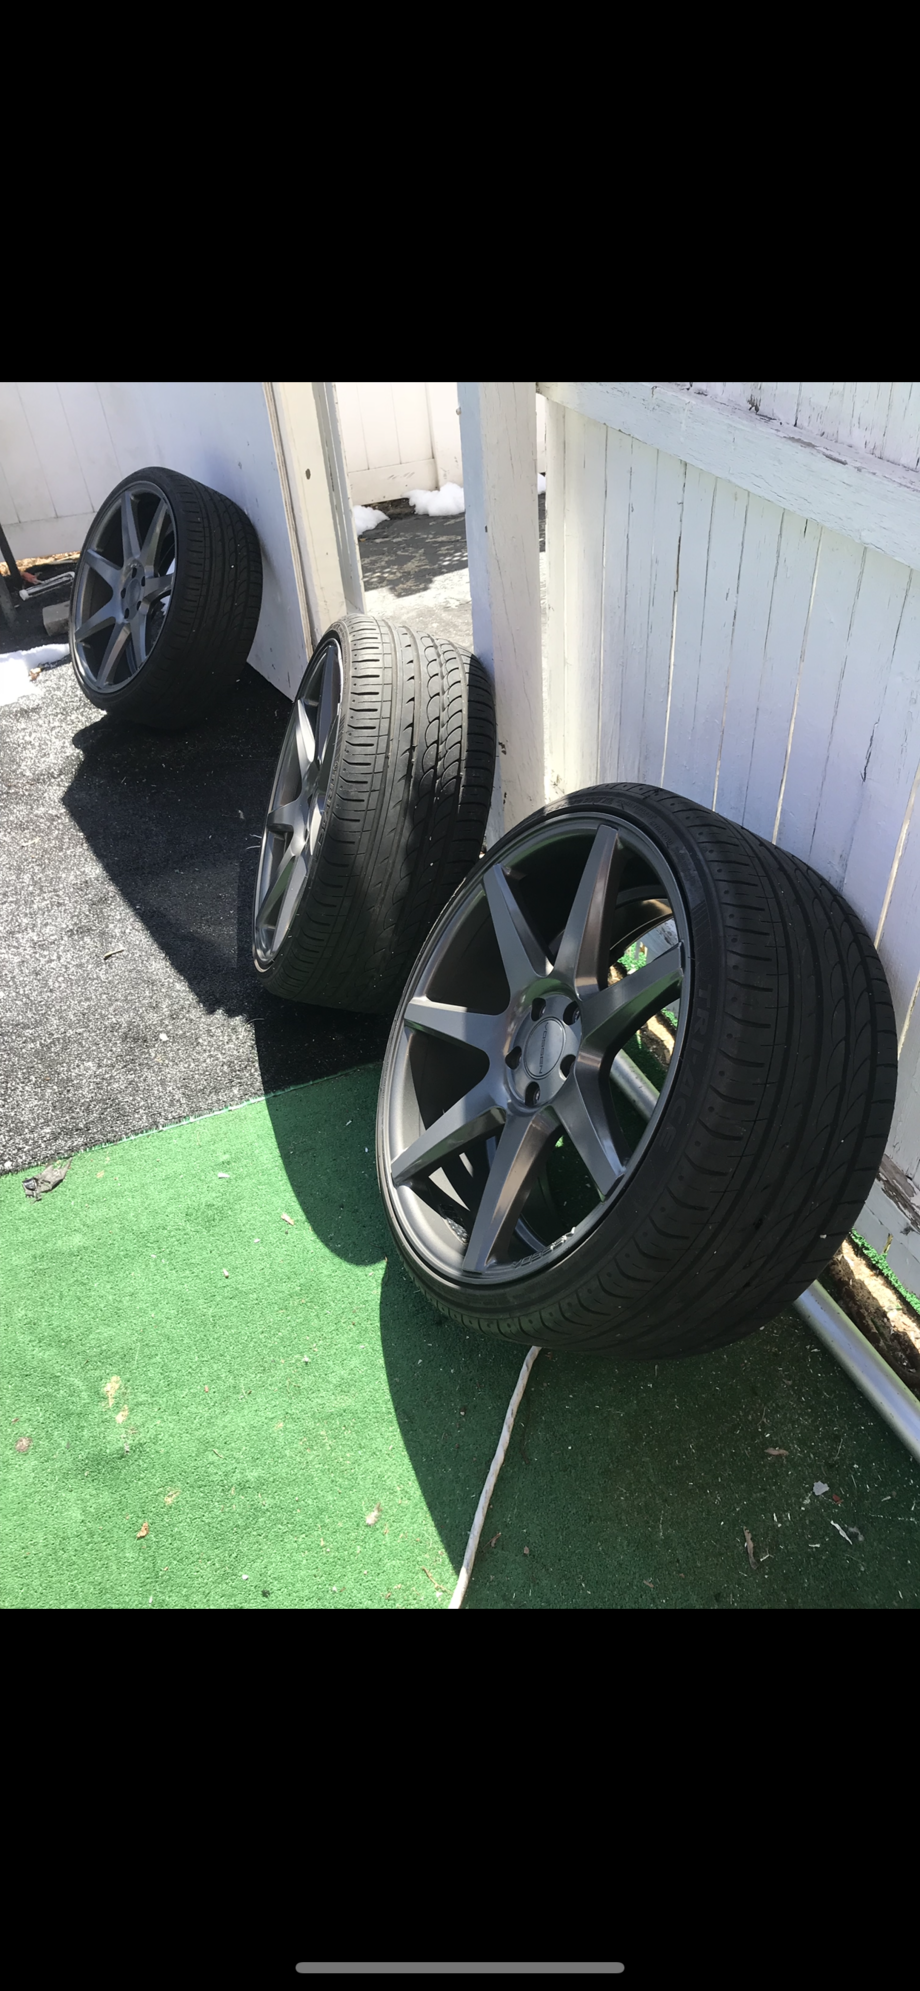 Wheels and Tires/Axles - Vossen cv7 20" matte graphite - Used - 2007 to 2019 Mercedes-Benz E350 - Lindenhurst, NY 11757, United States